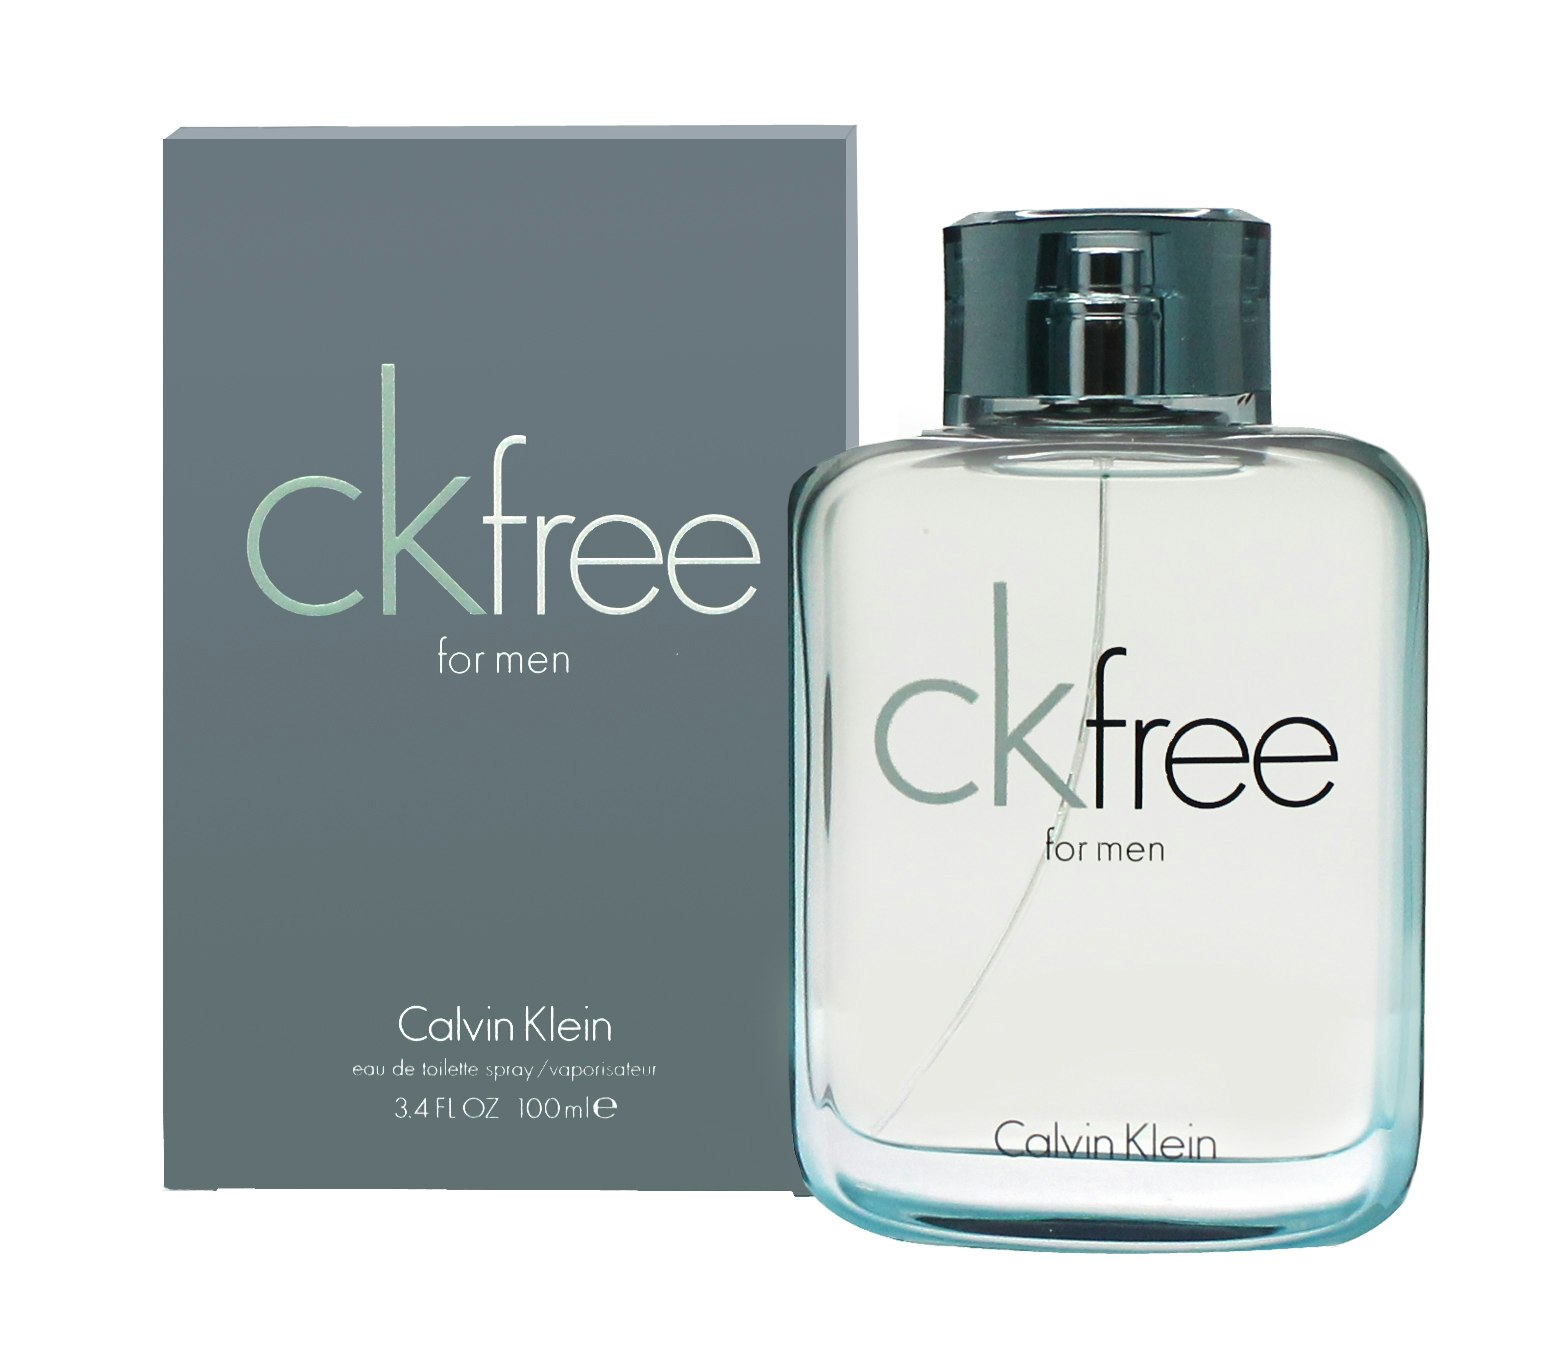 Calvin Klein CK Free for men Edt